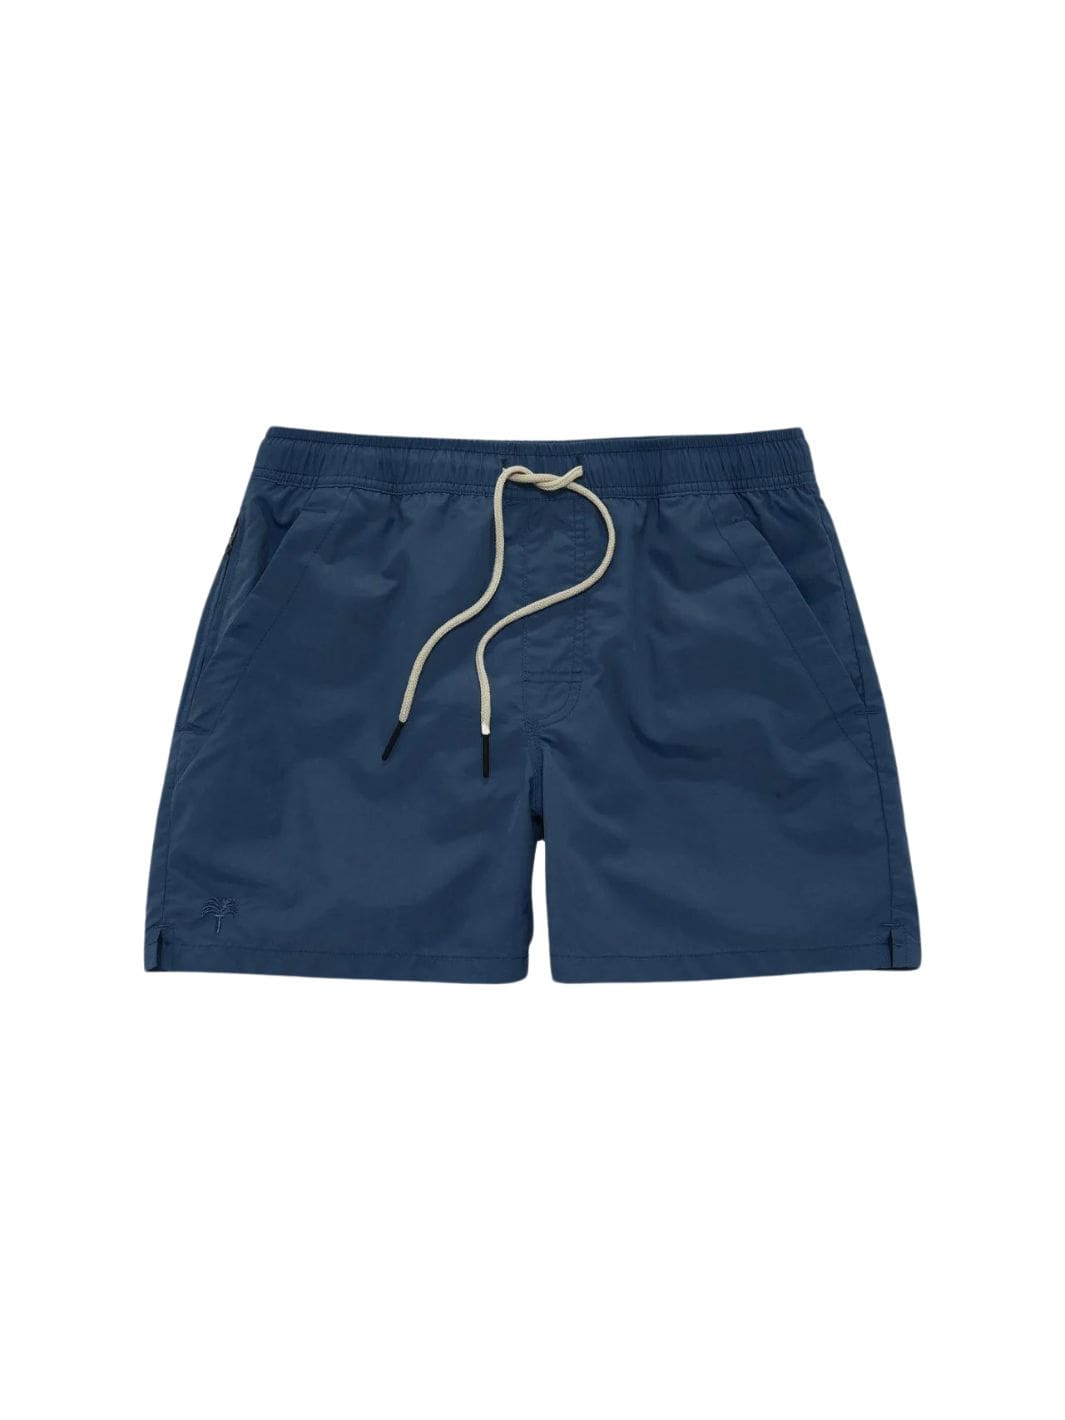 Oas Shorts Badeshorts | Nylon Swim Shorts Navy